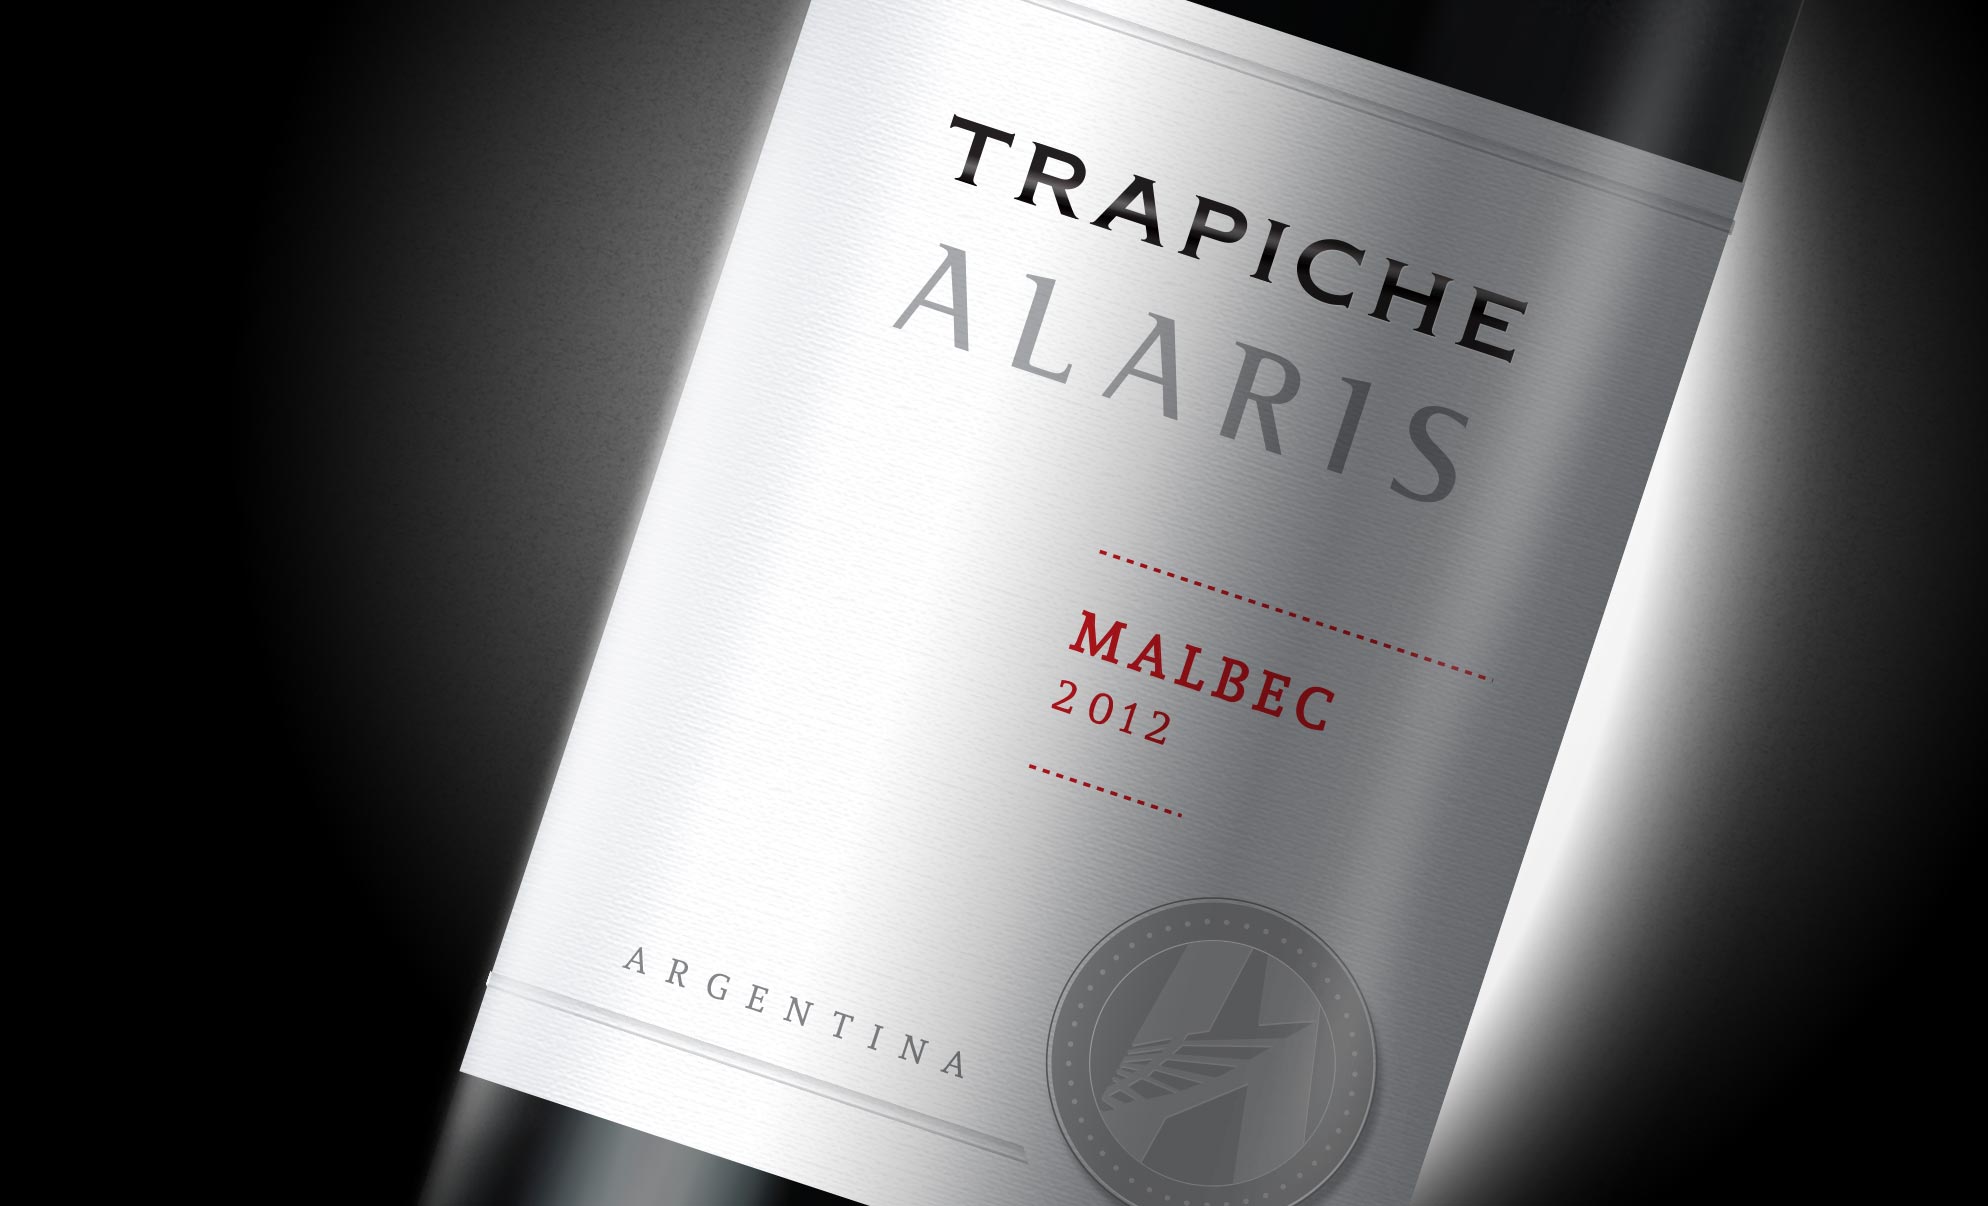 Grupo Peñaflor Trapiche Alaris Wine Vino Malbec